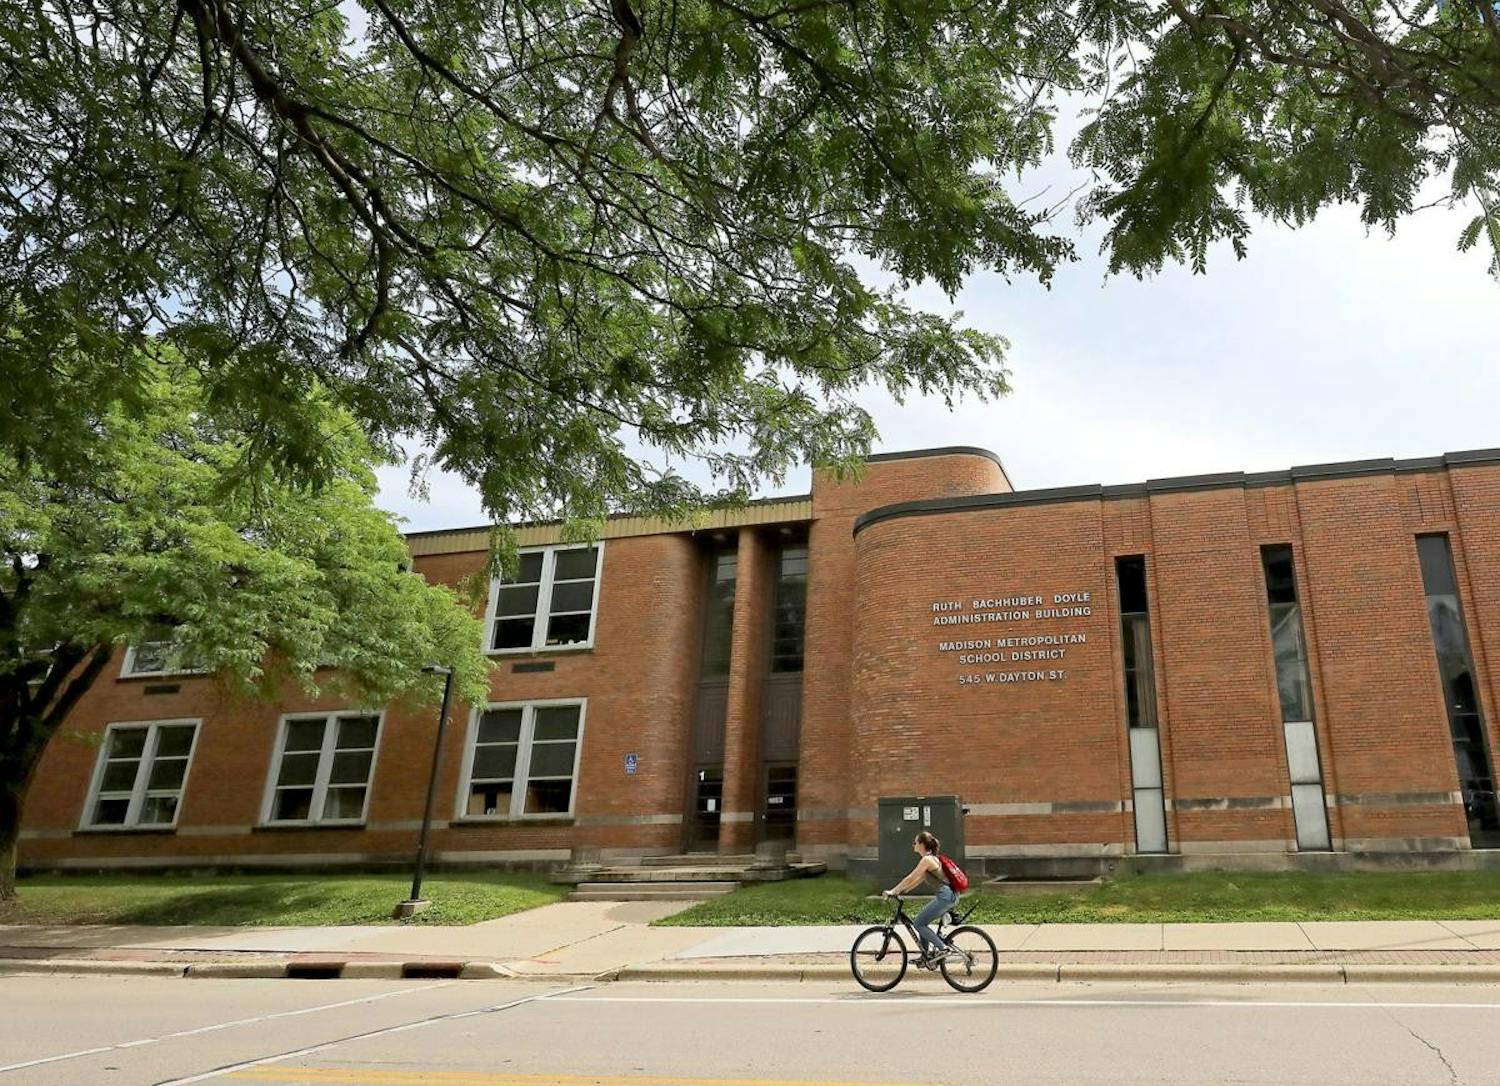 Madison Metropolitan School District Headquarters